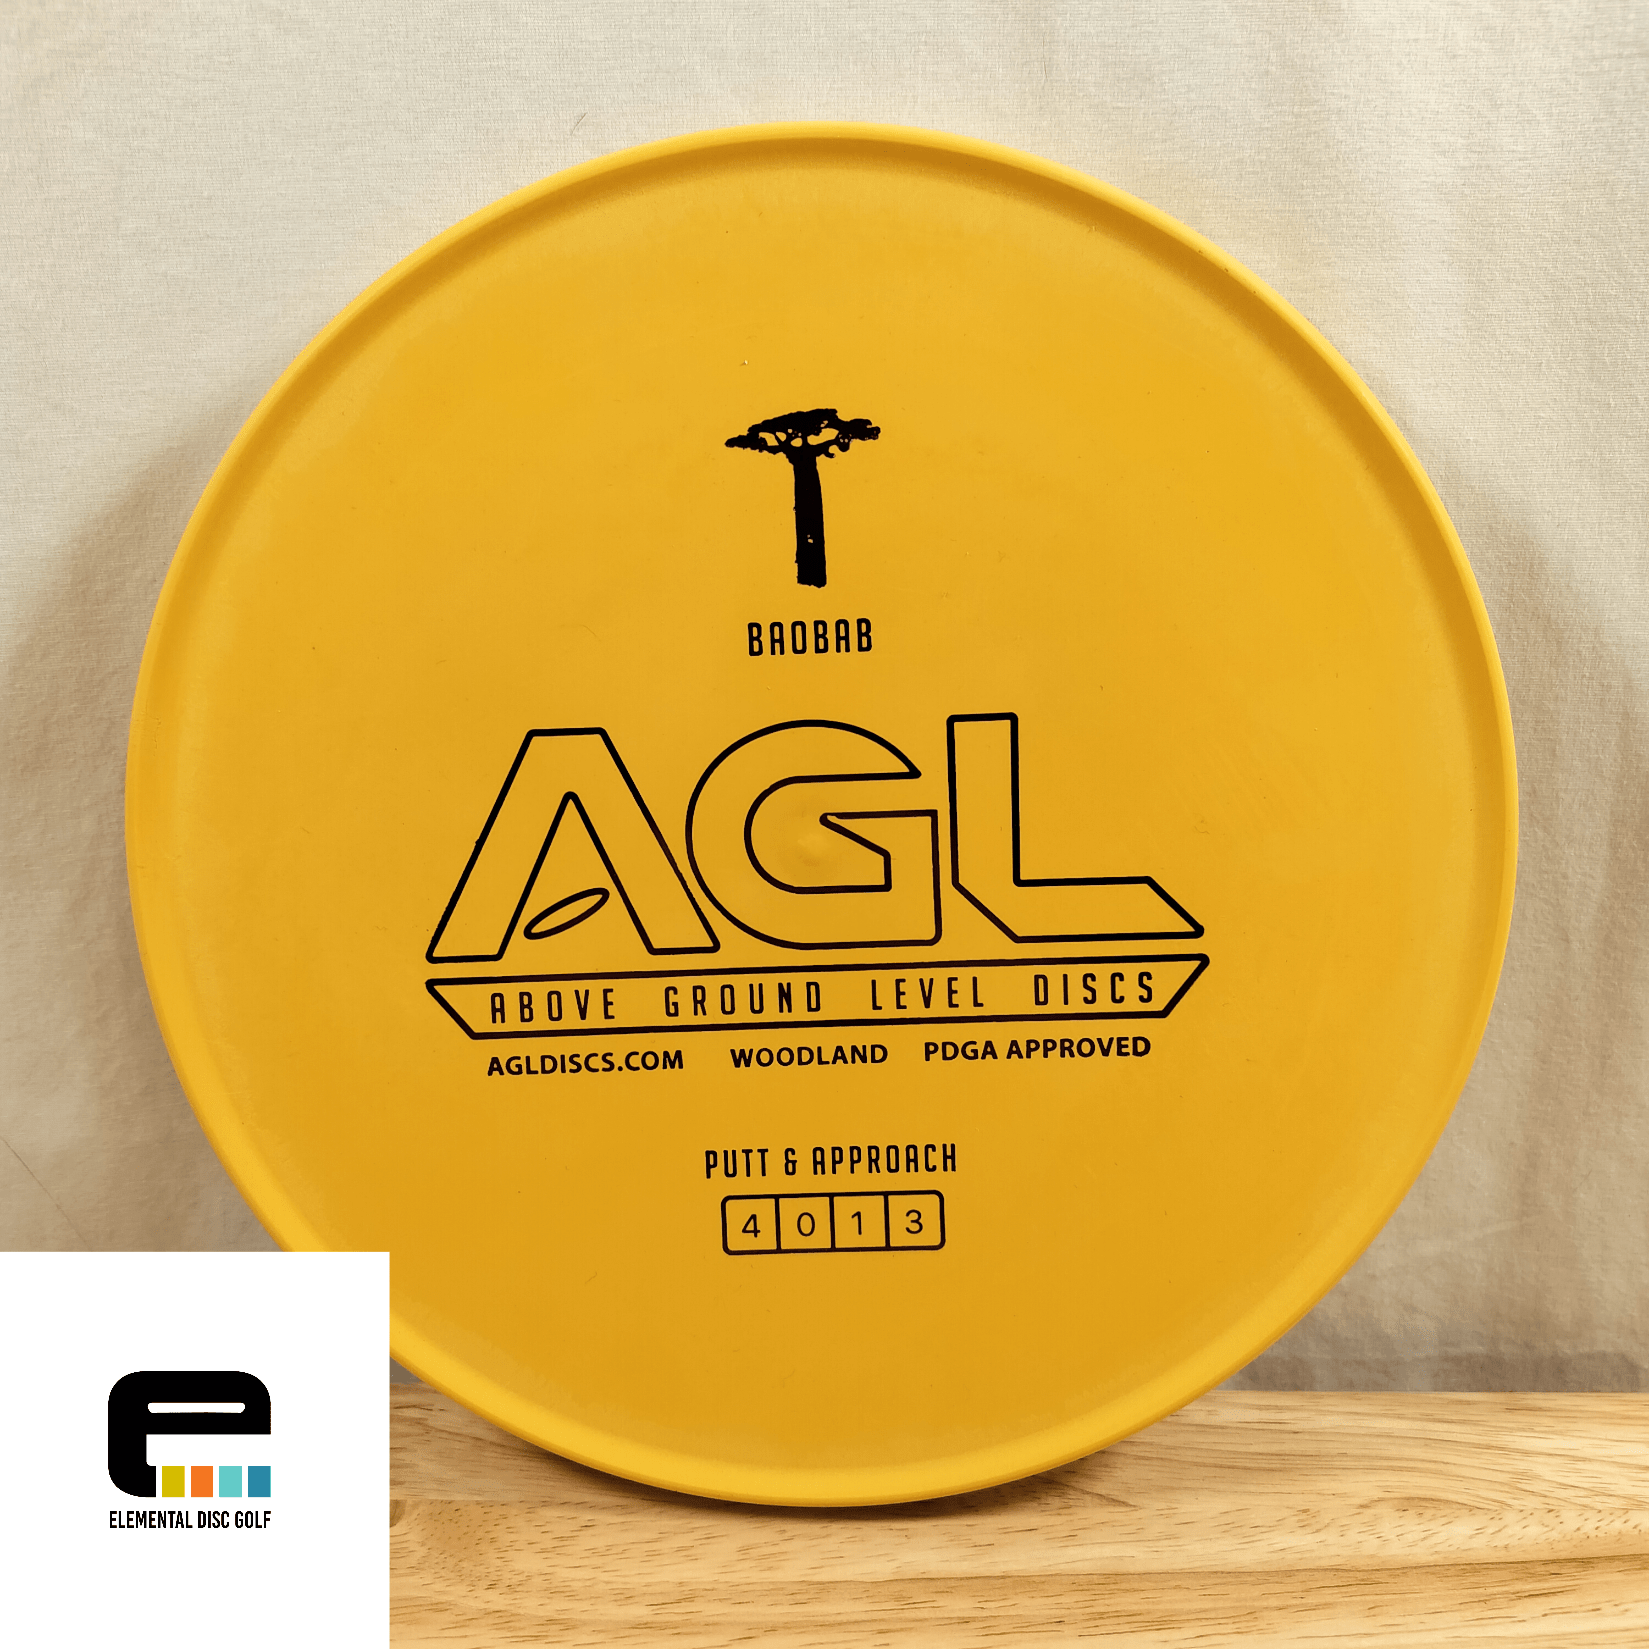 Above Ground Level (AGL) - Elemental Disc Golf